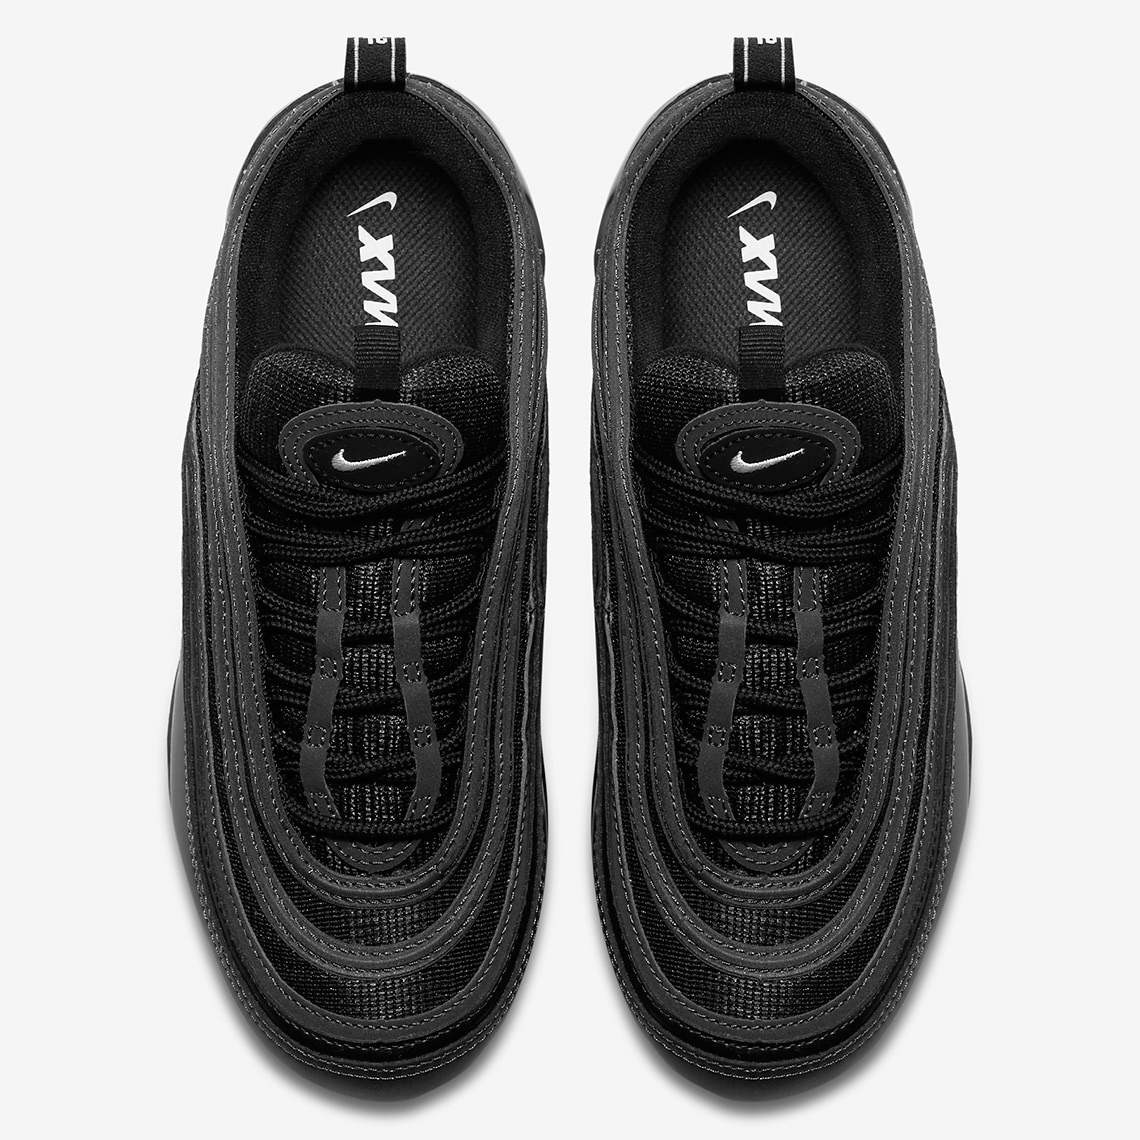 Nike Vapormax 97 Ao4542 001 Coming Soon 7